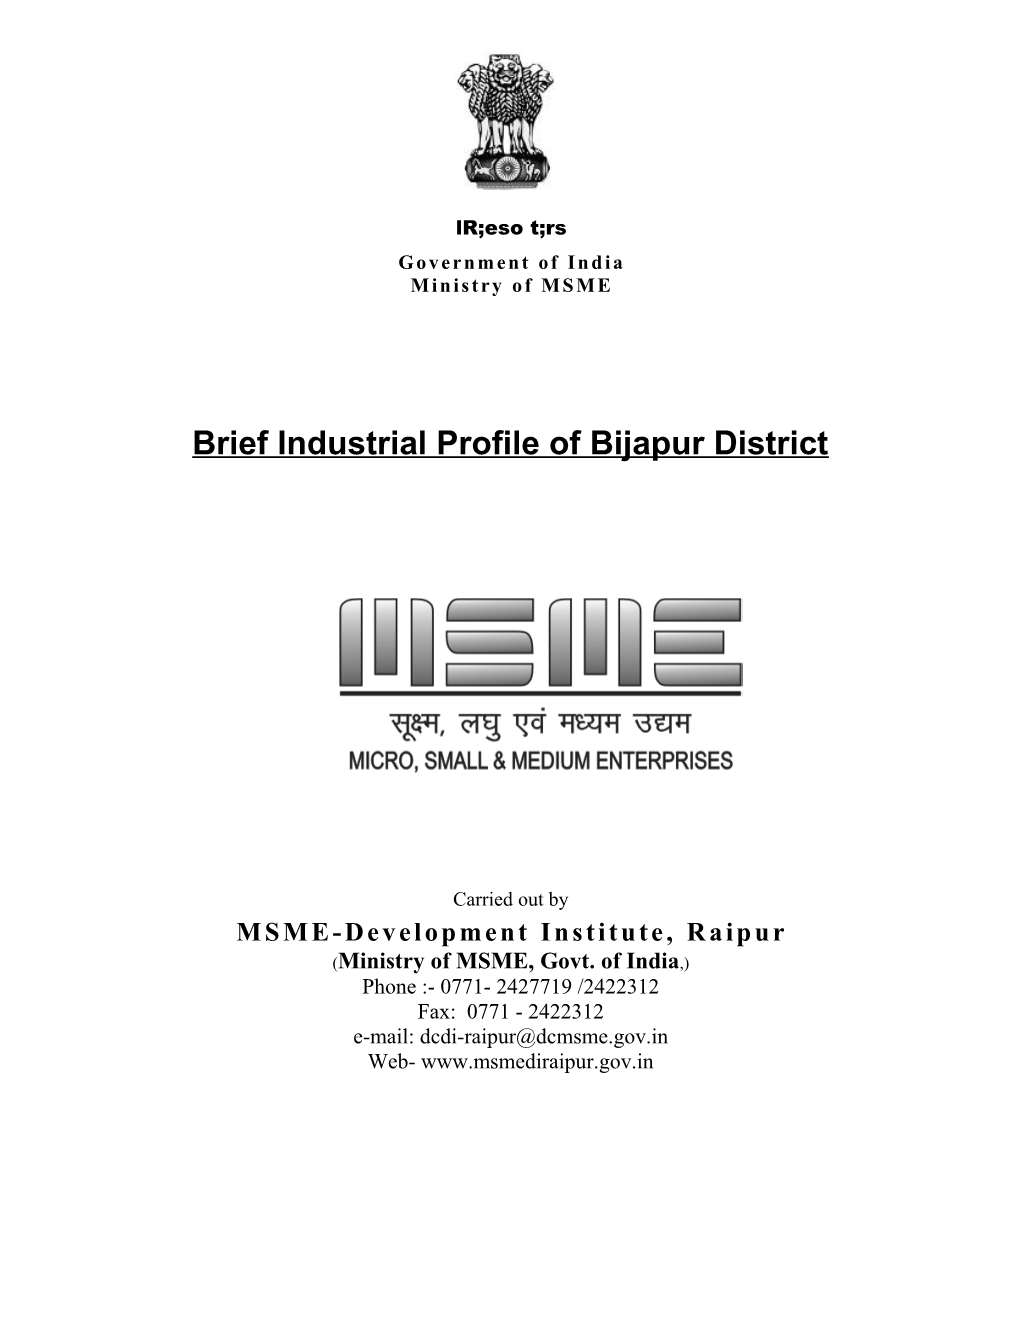 Brief Industrial Profile of Bijapur District